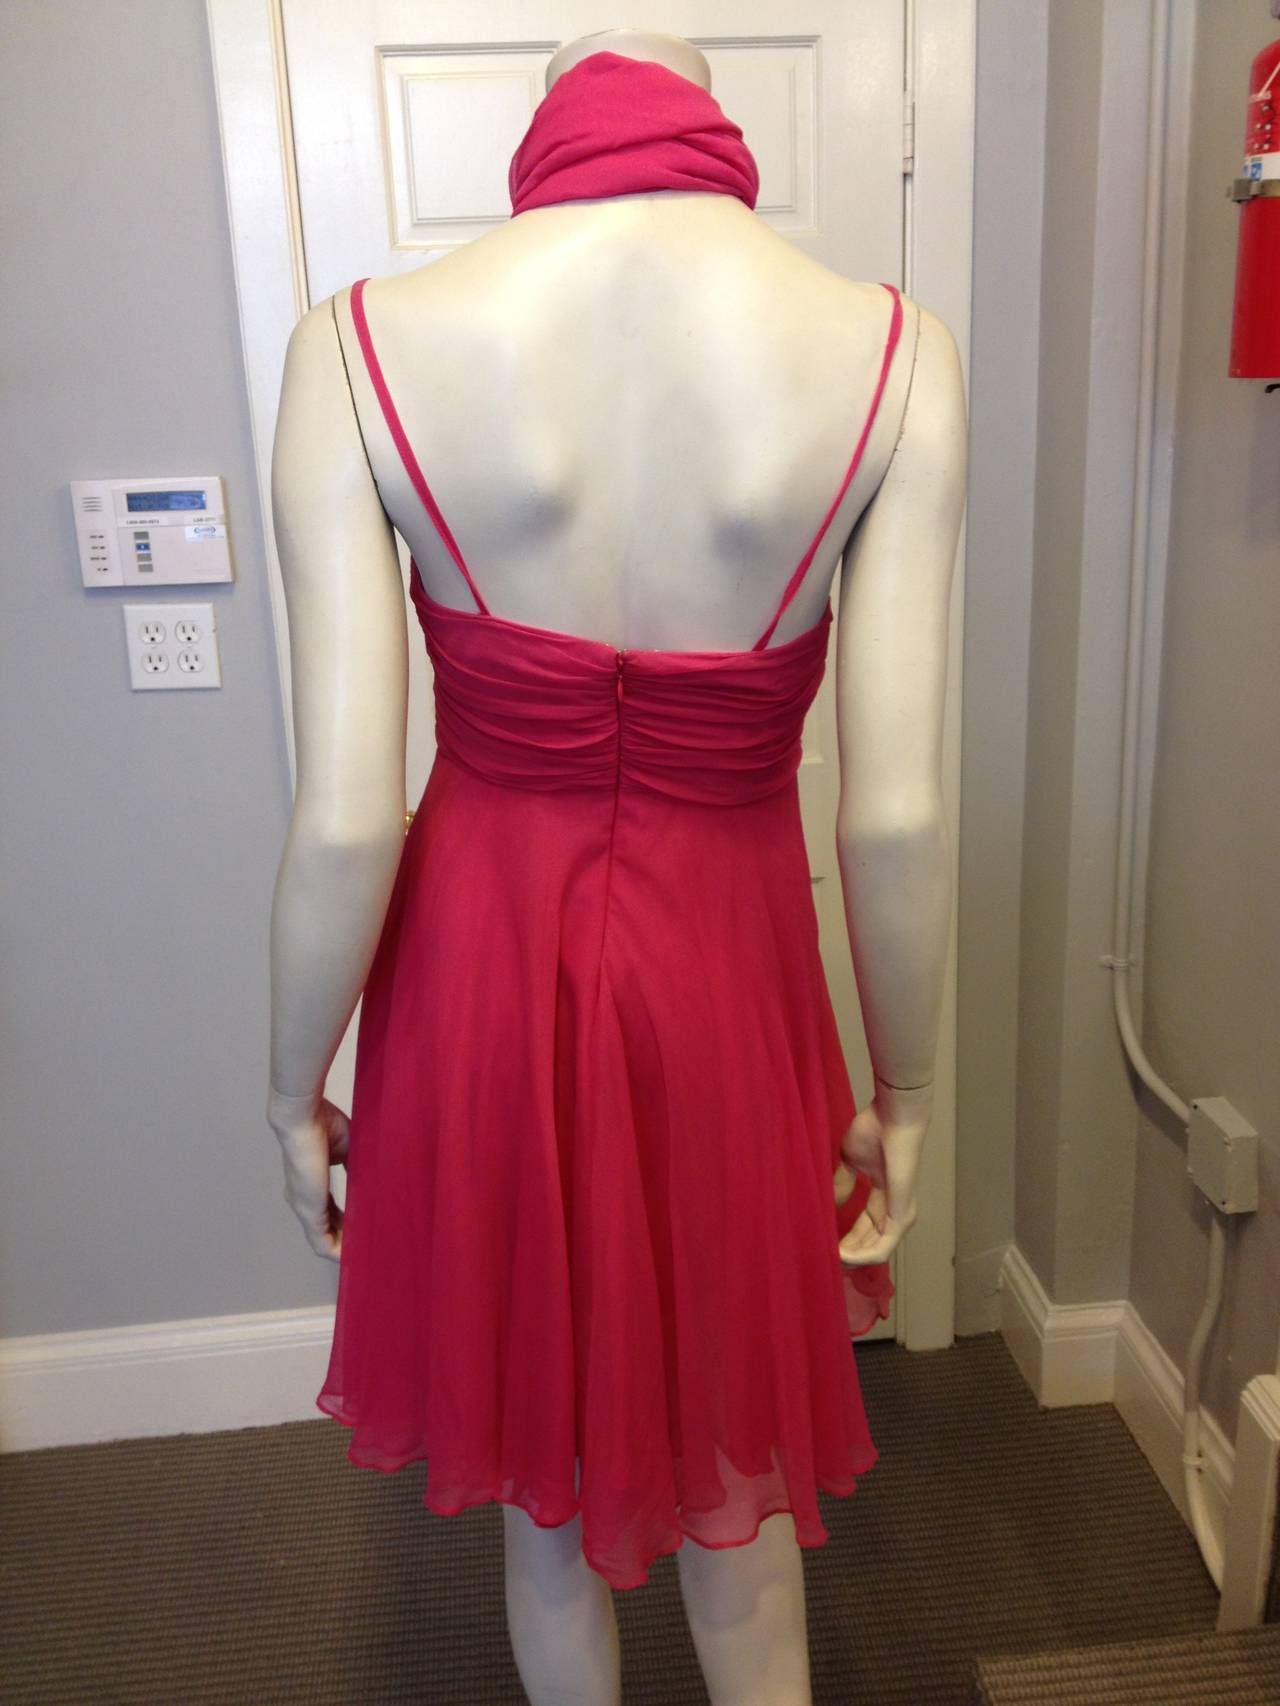 Women's Sophie Sitbon Pink Chiffon Dress